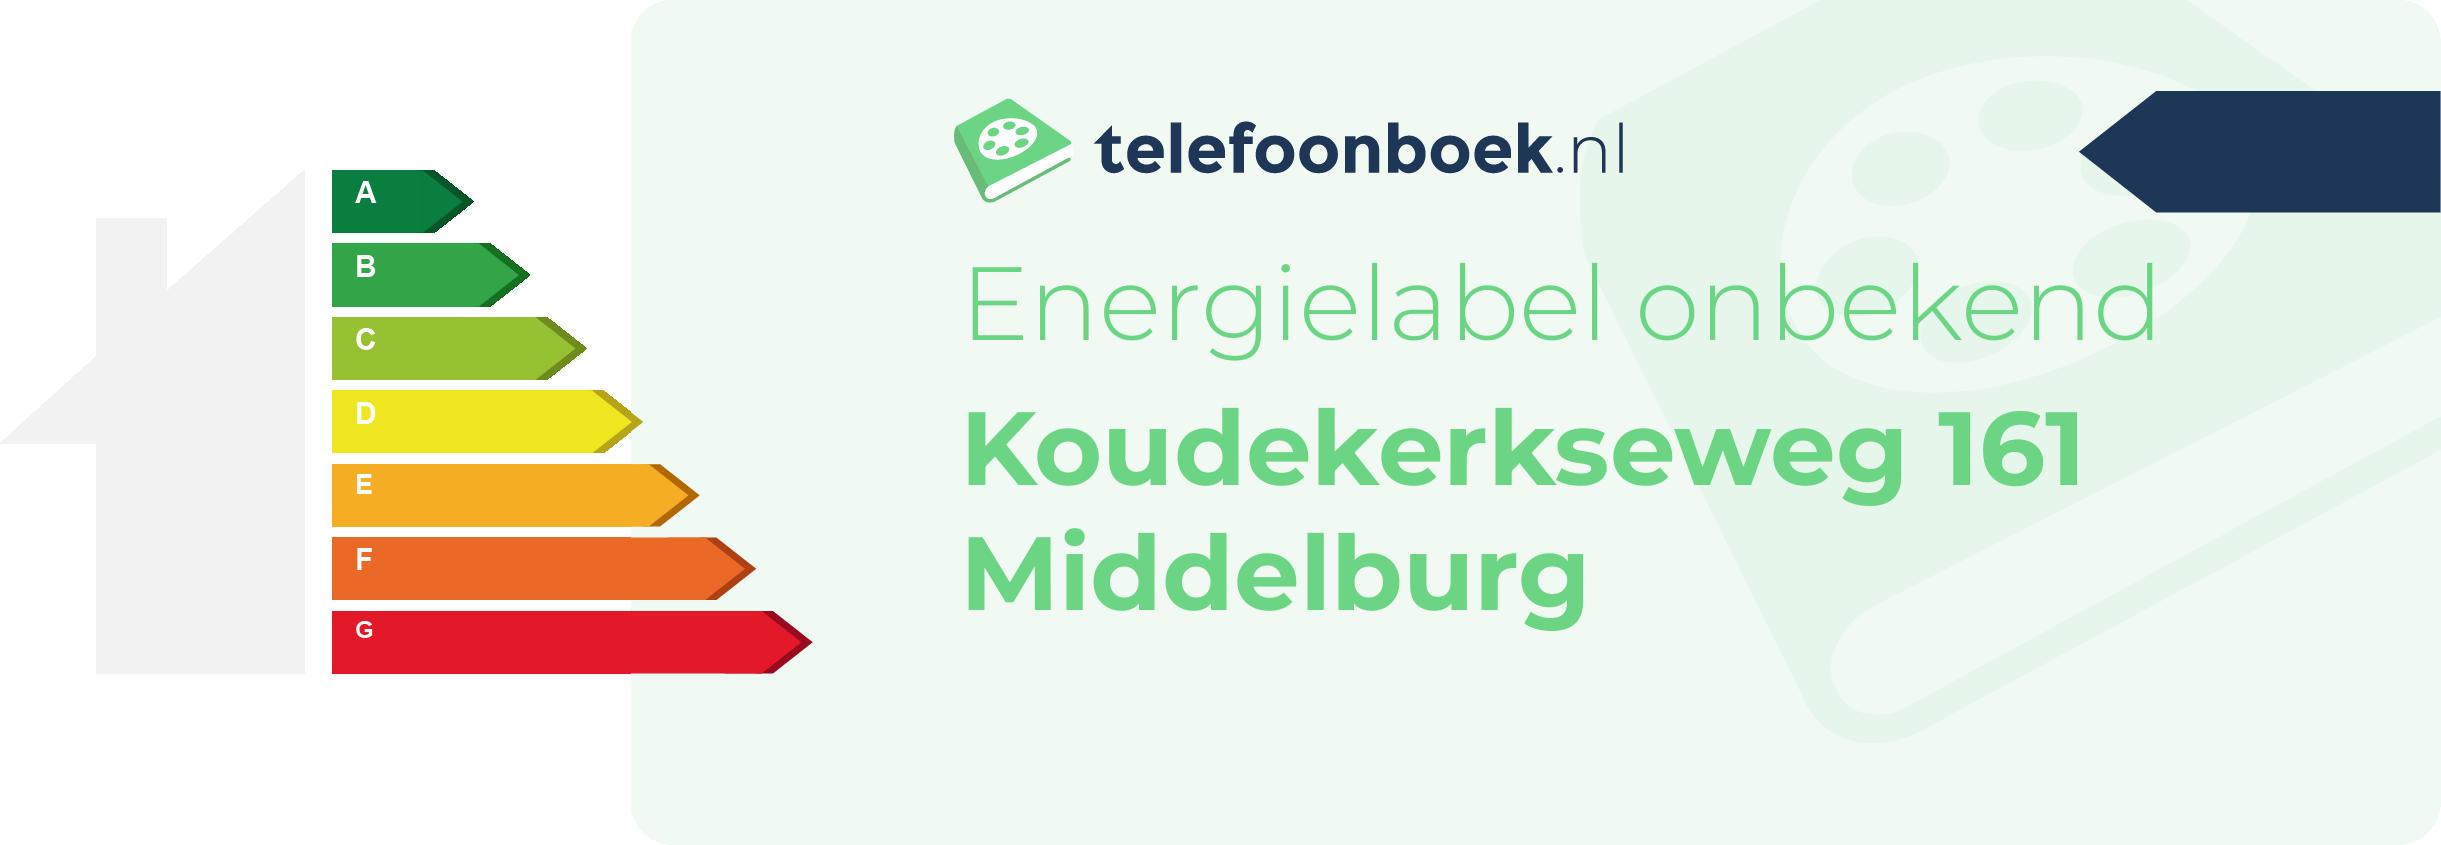 Energielabel Koudekerkseweg 161 Middelburg